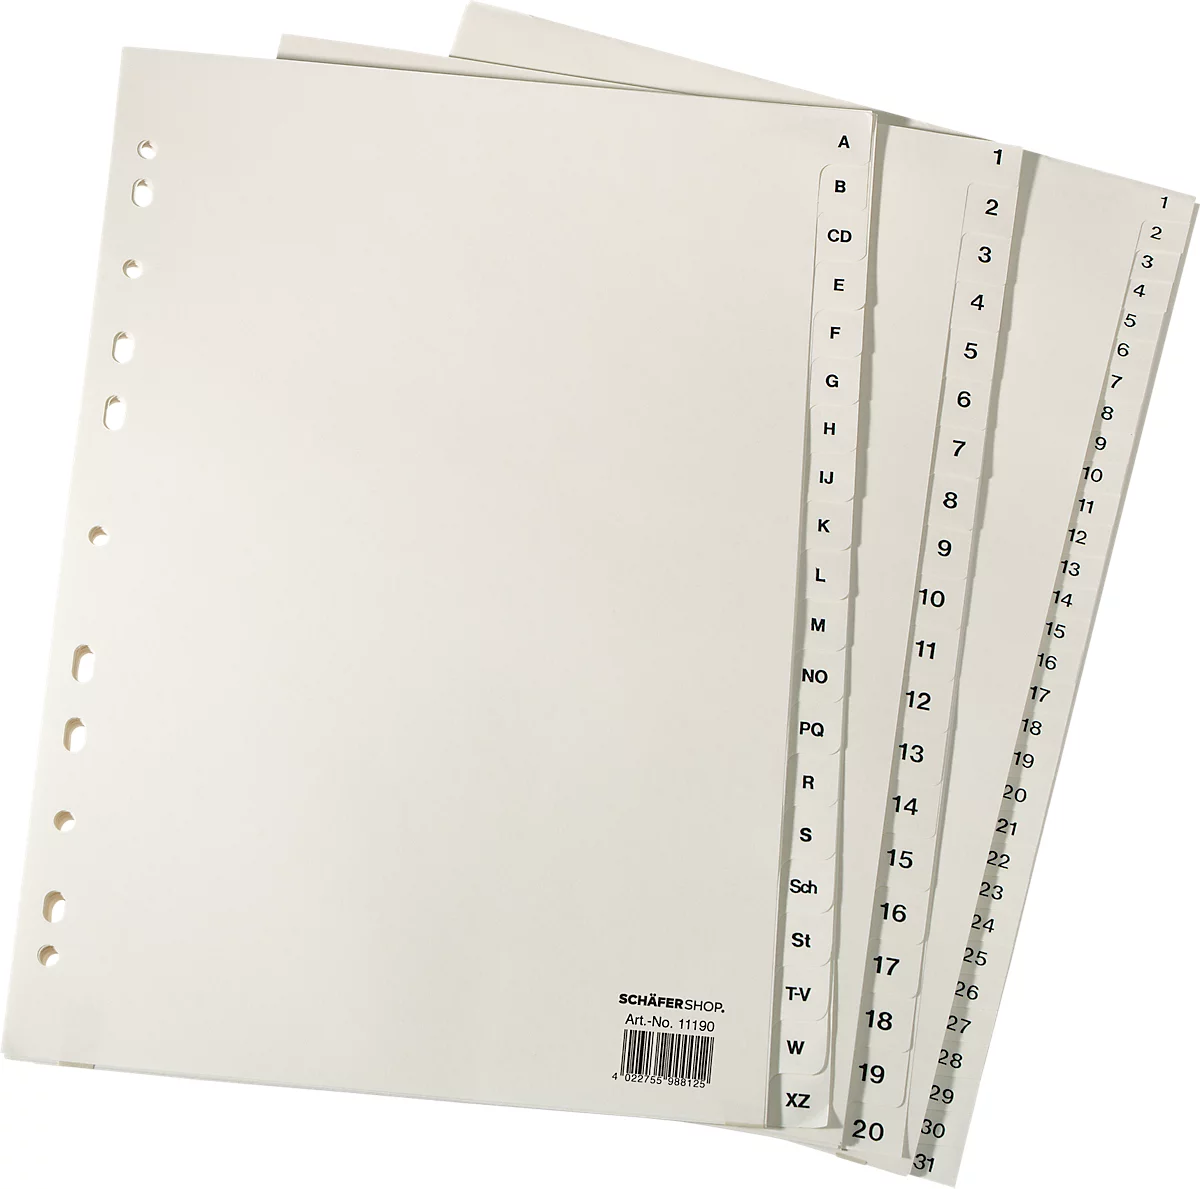 Intercalaires en papier format A4, individuel, format A4 1-10, chamois clair